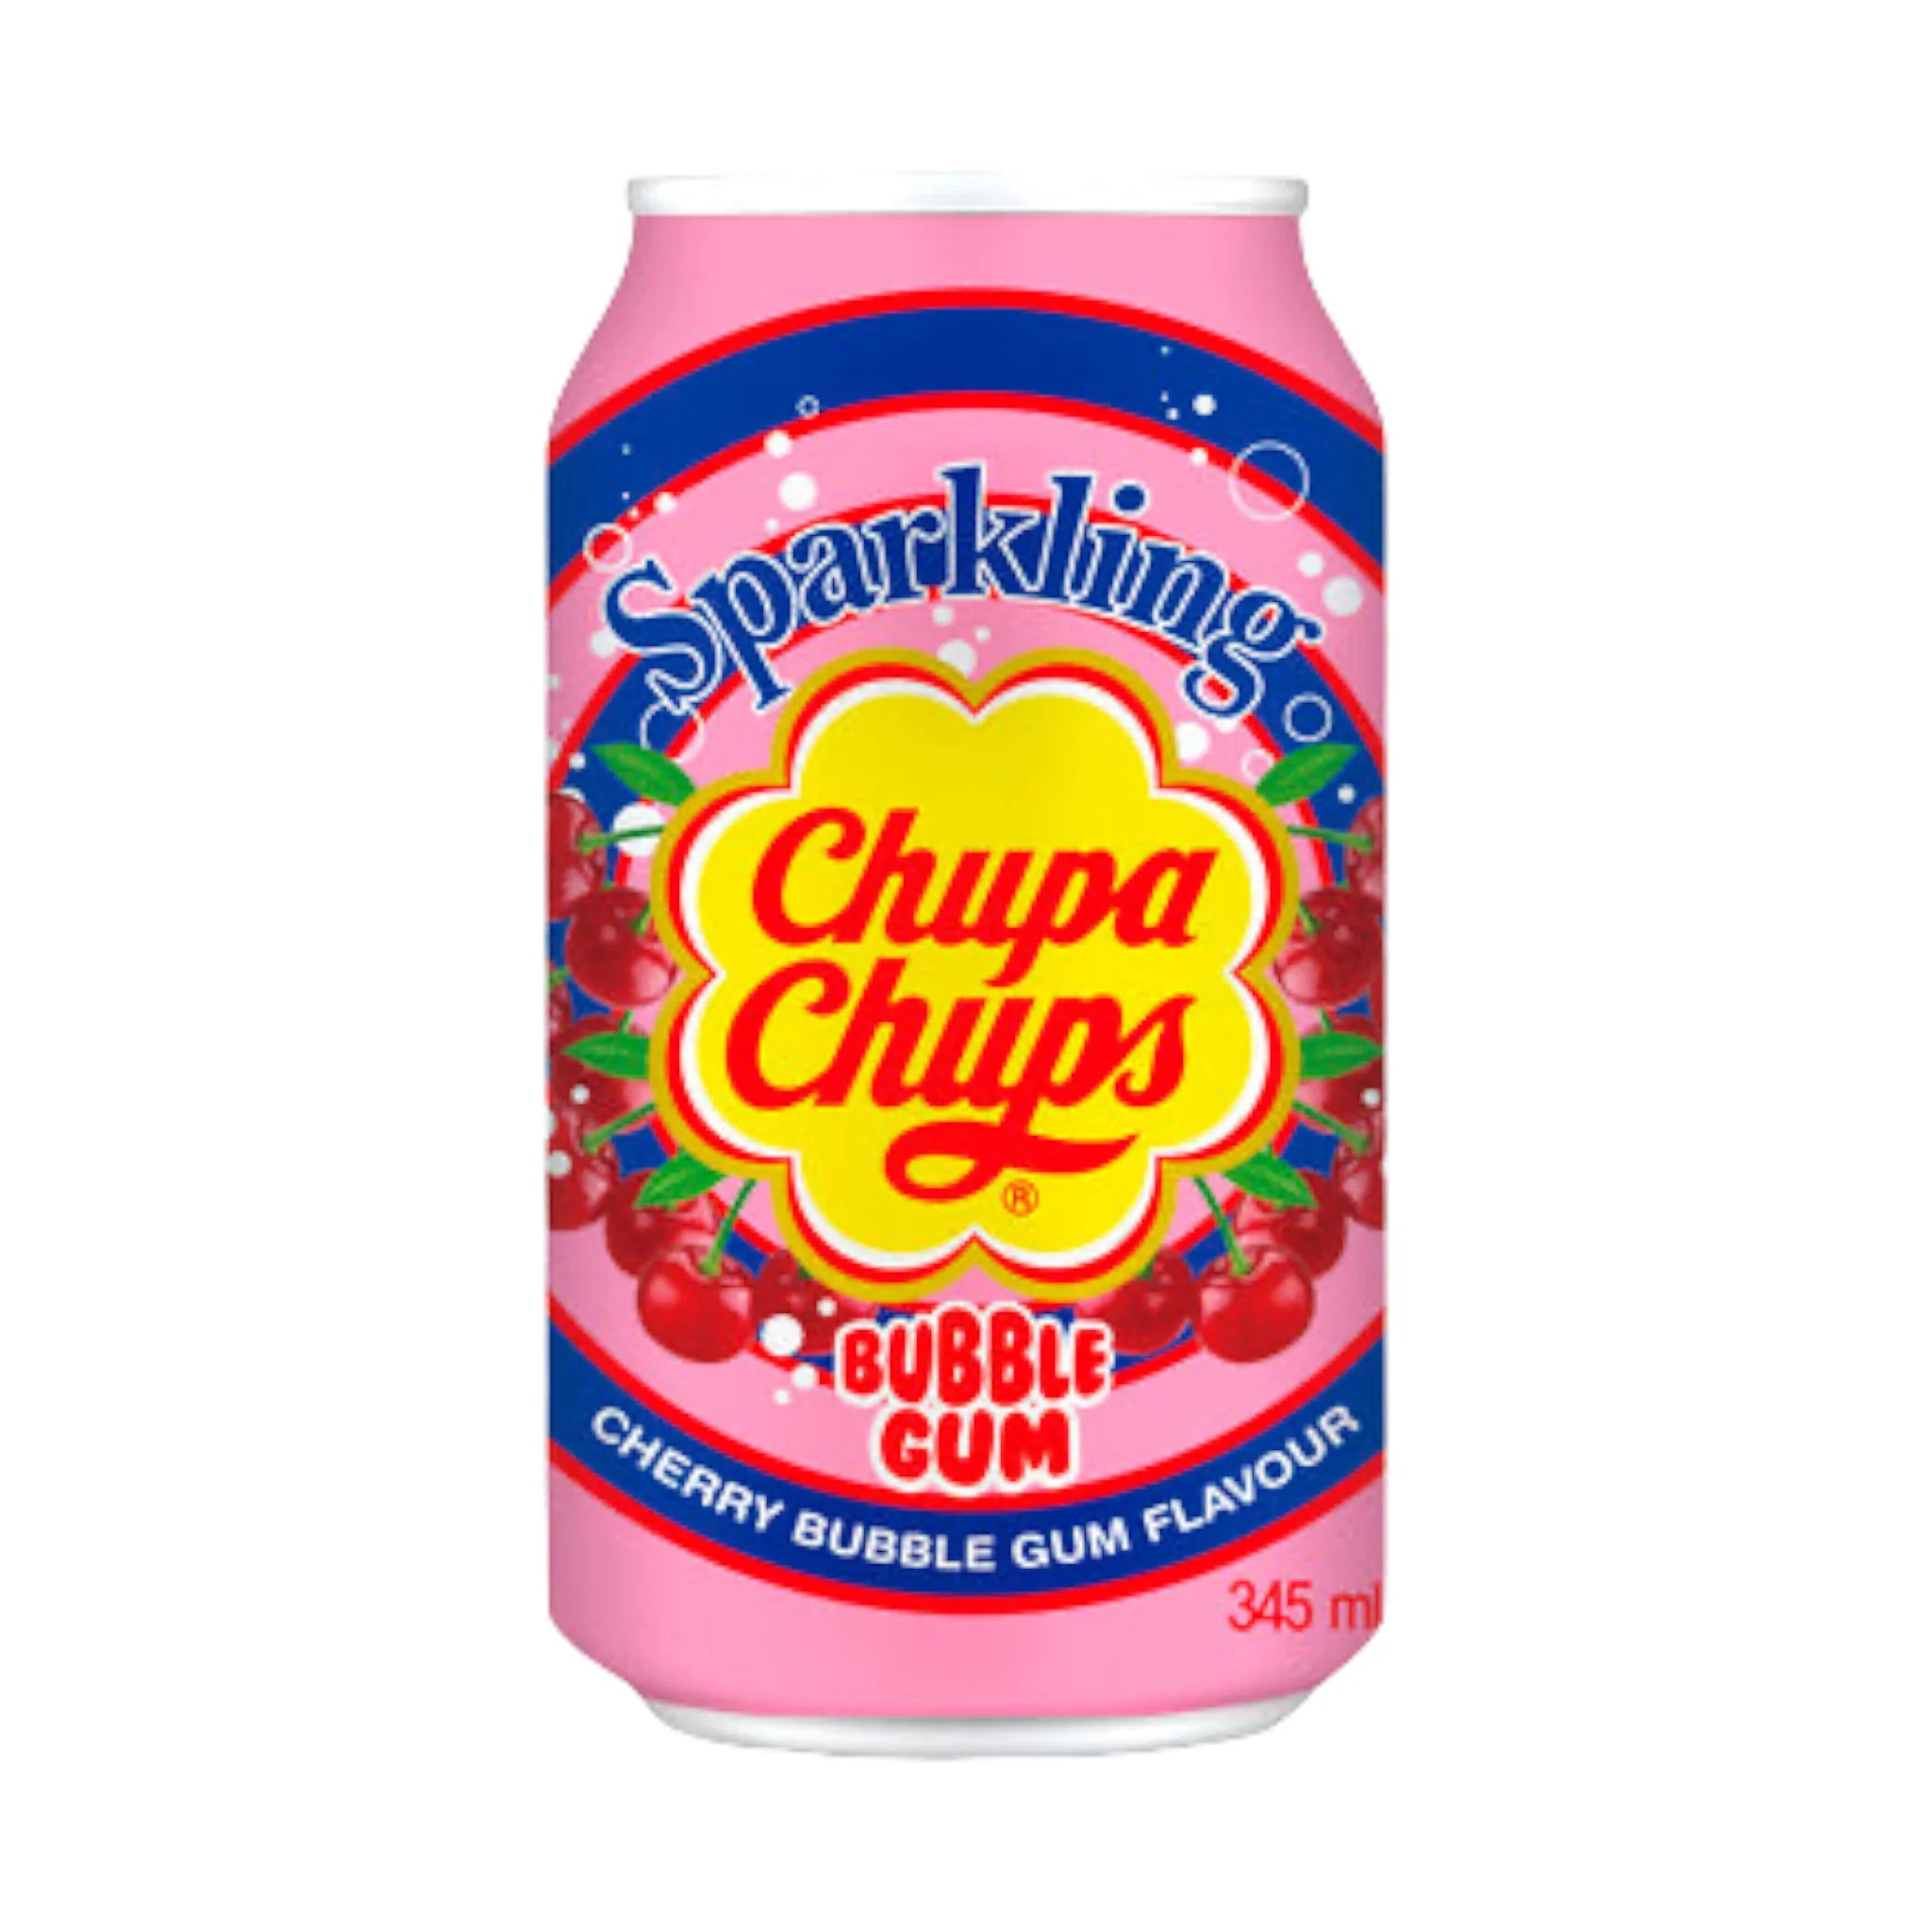 Chupa Chups Cherry Bubblegum Soda (345ml)